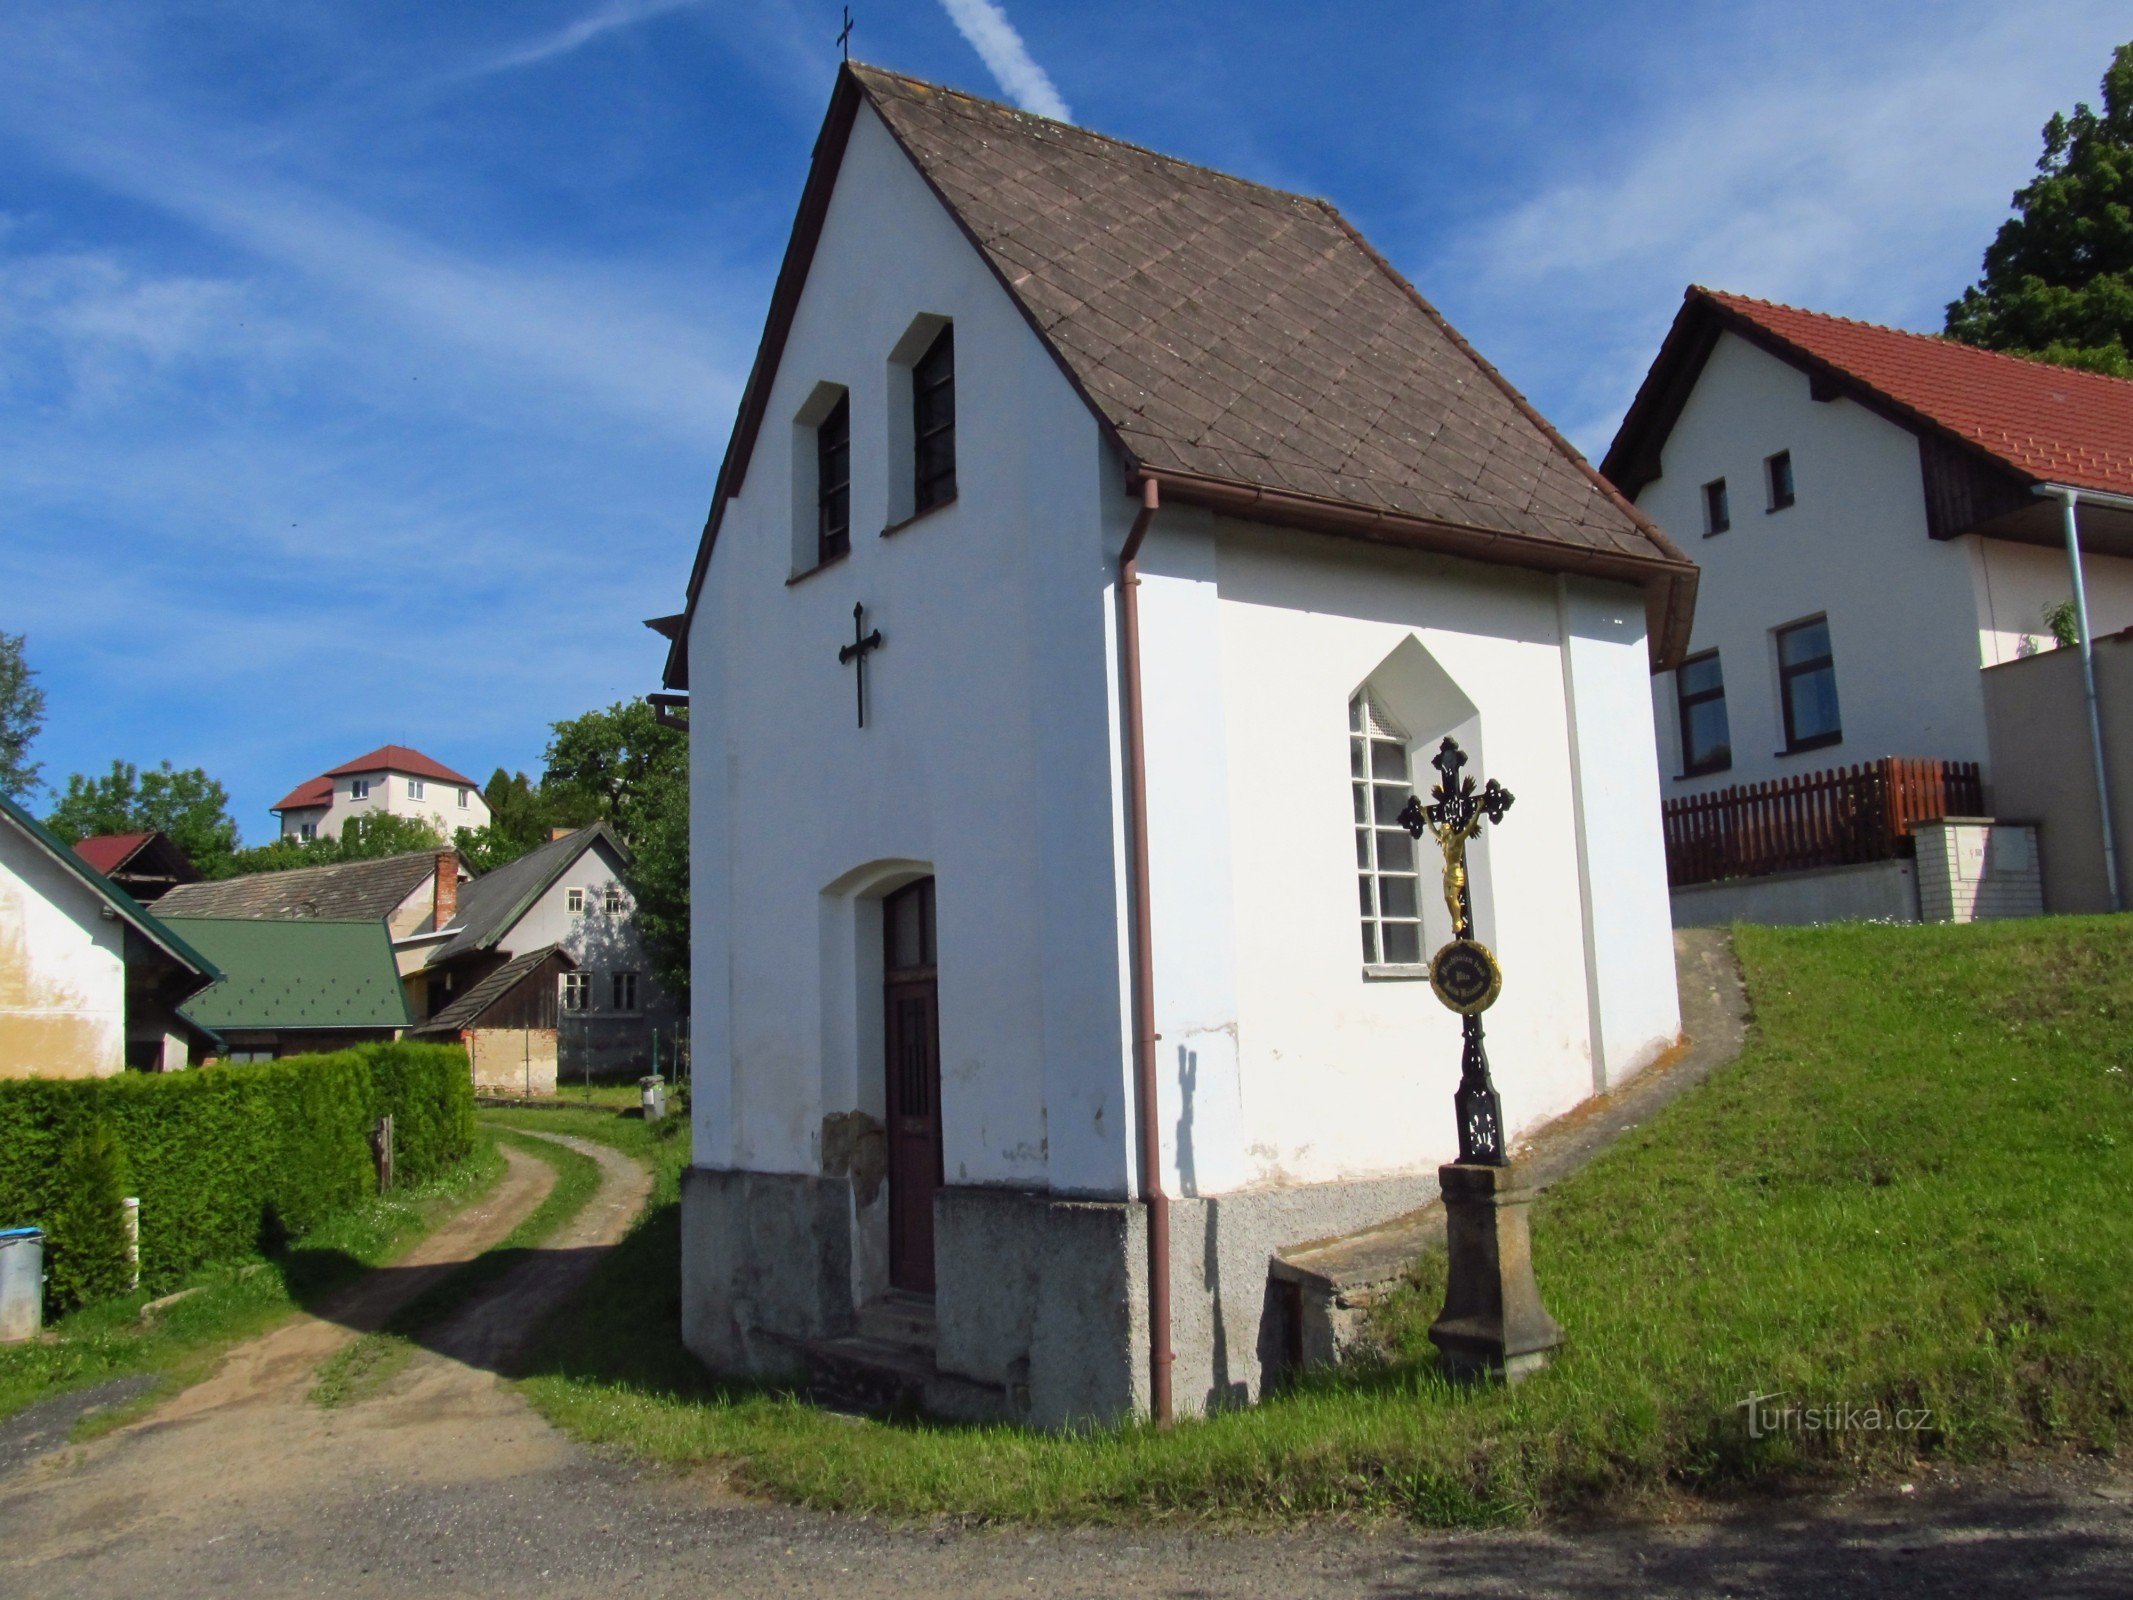 03 Obravn，小教堂